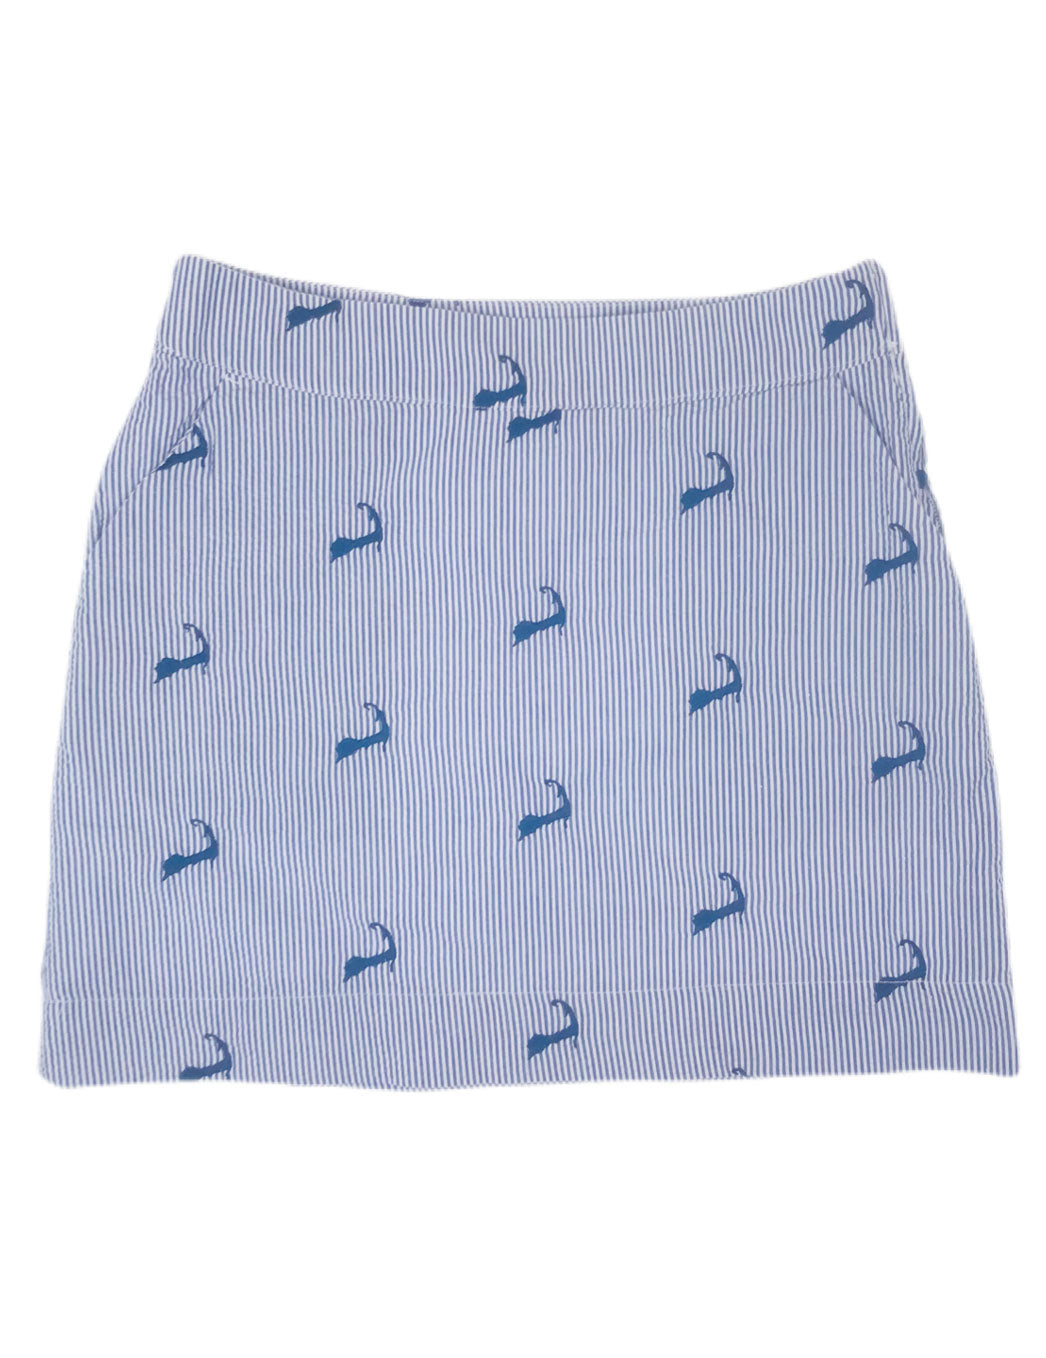 Blue Seersucker Women's Skirt with Navy Embroidered Cape Cods